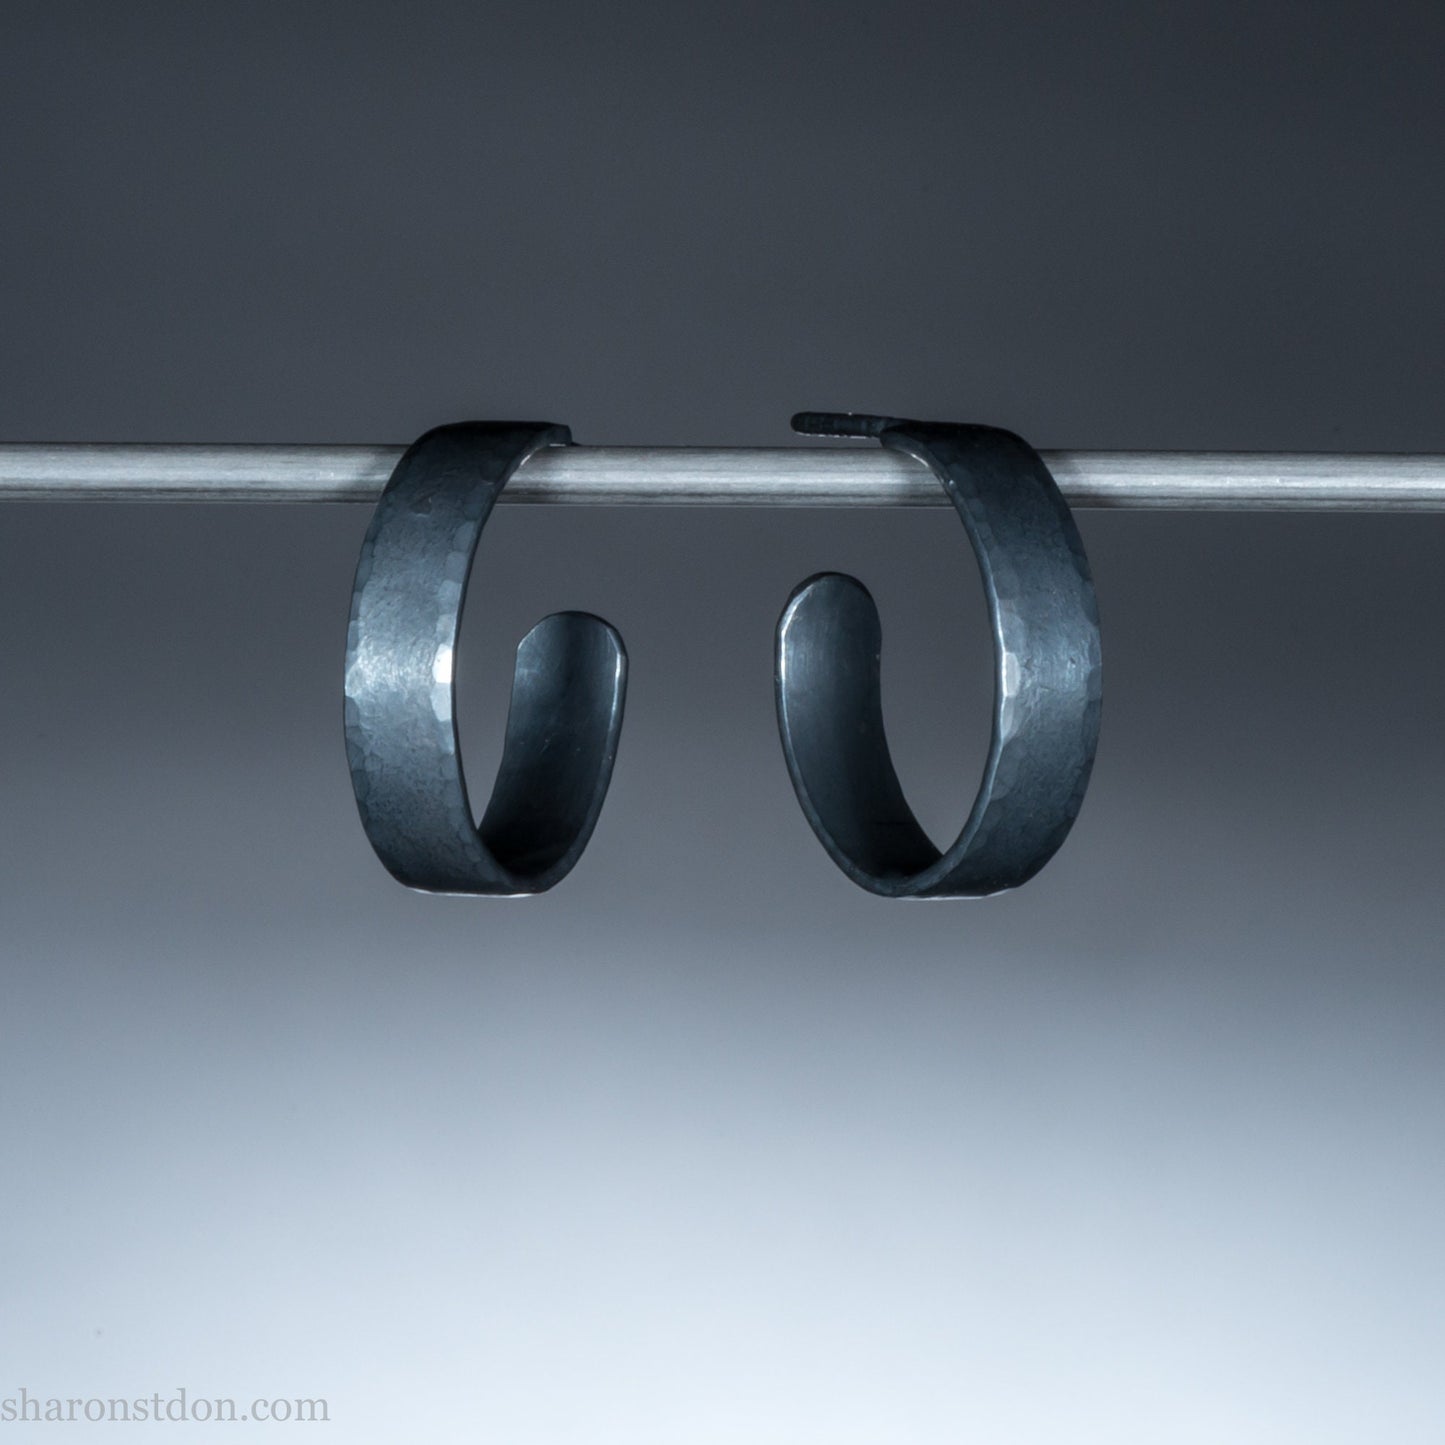 18mm x 4mm oxidized black 925 sterling silver hoop earrings, handmade in North America by Sharon SaintDon for men or women.